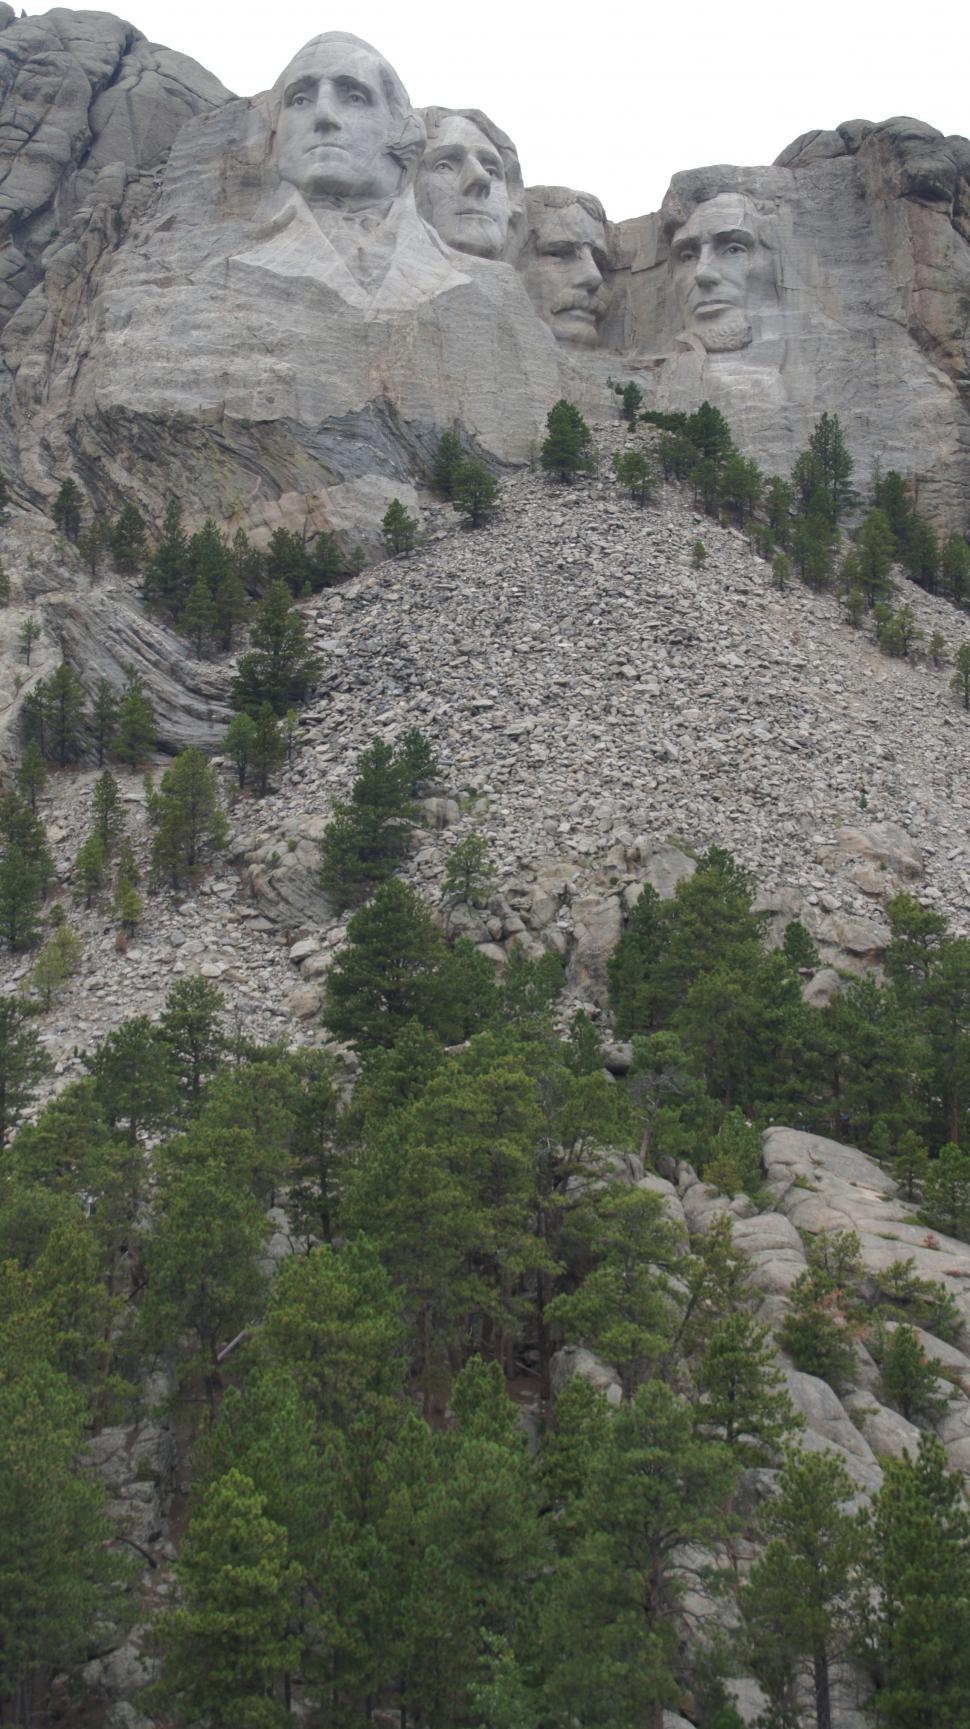 Free Image of Mt. Rushmore 